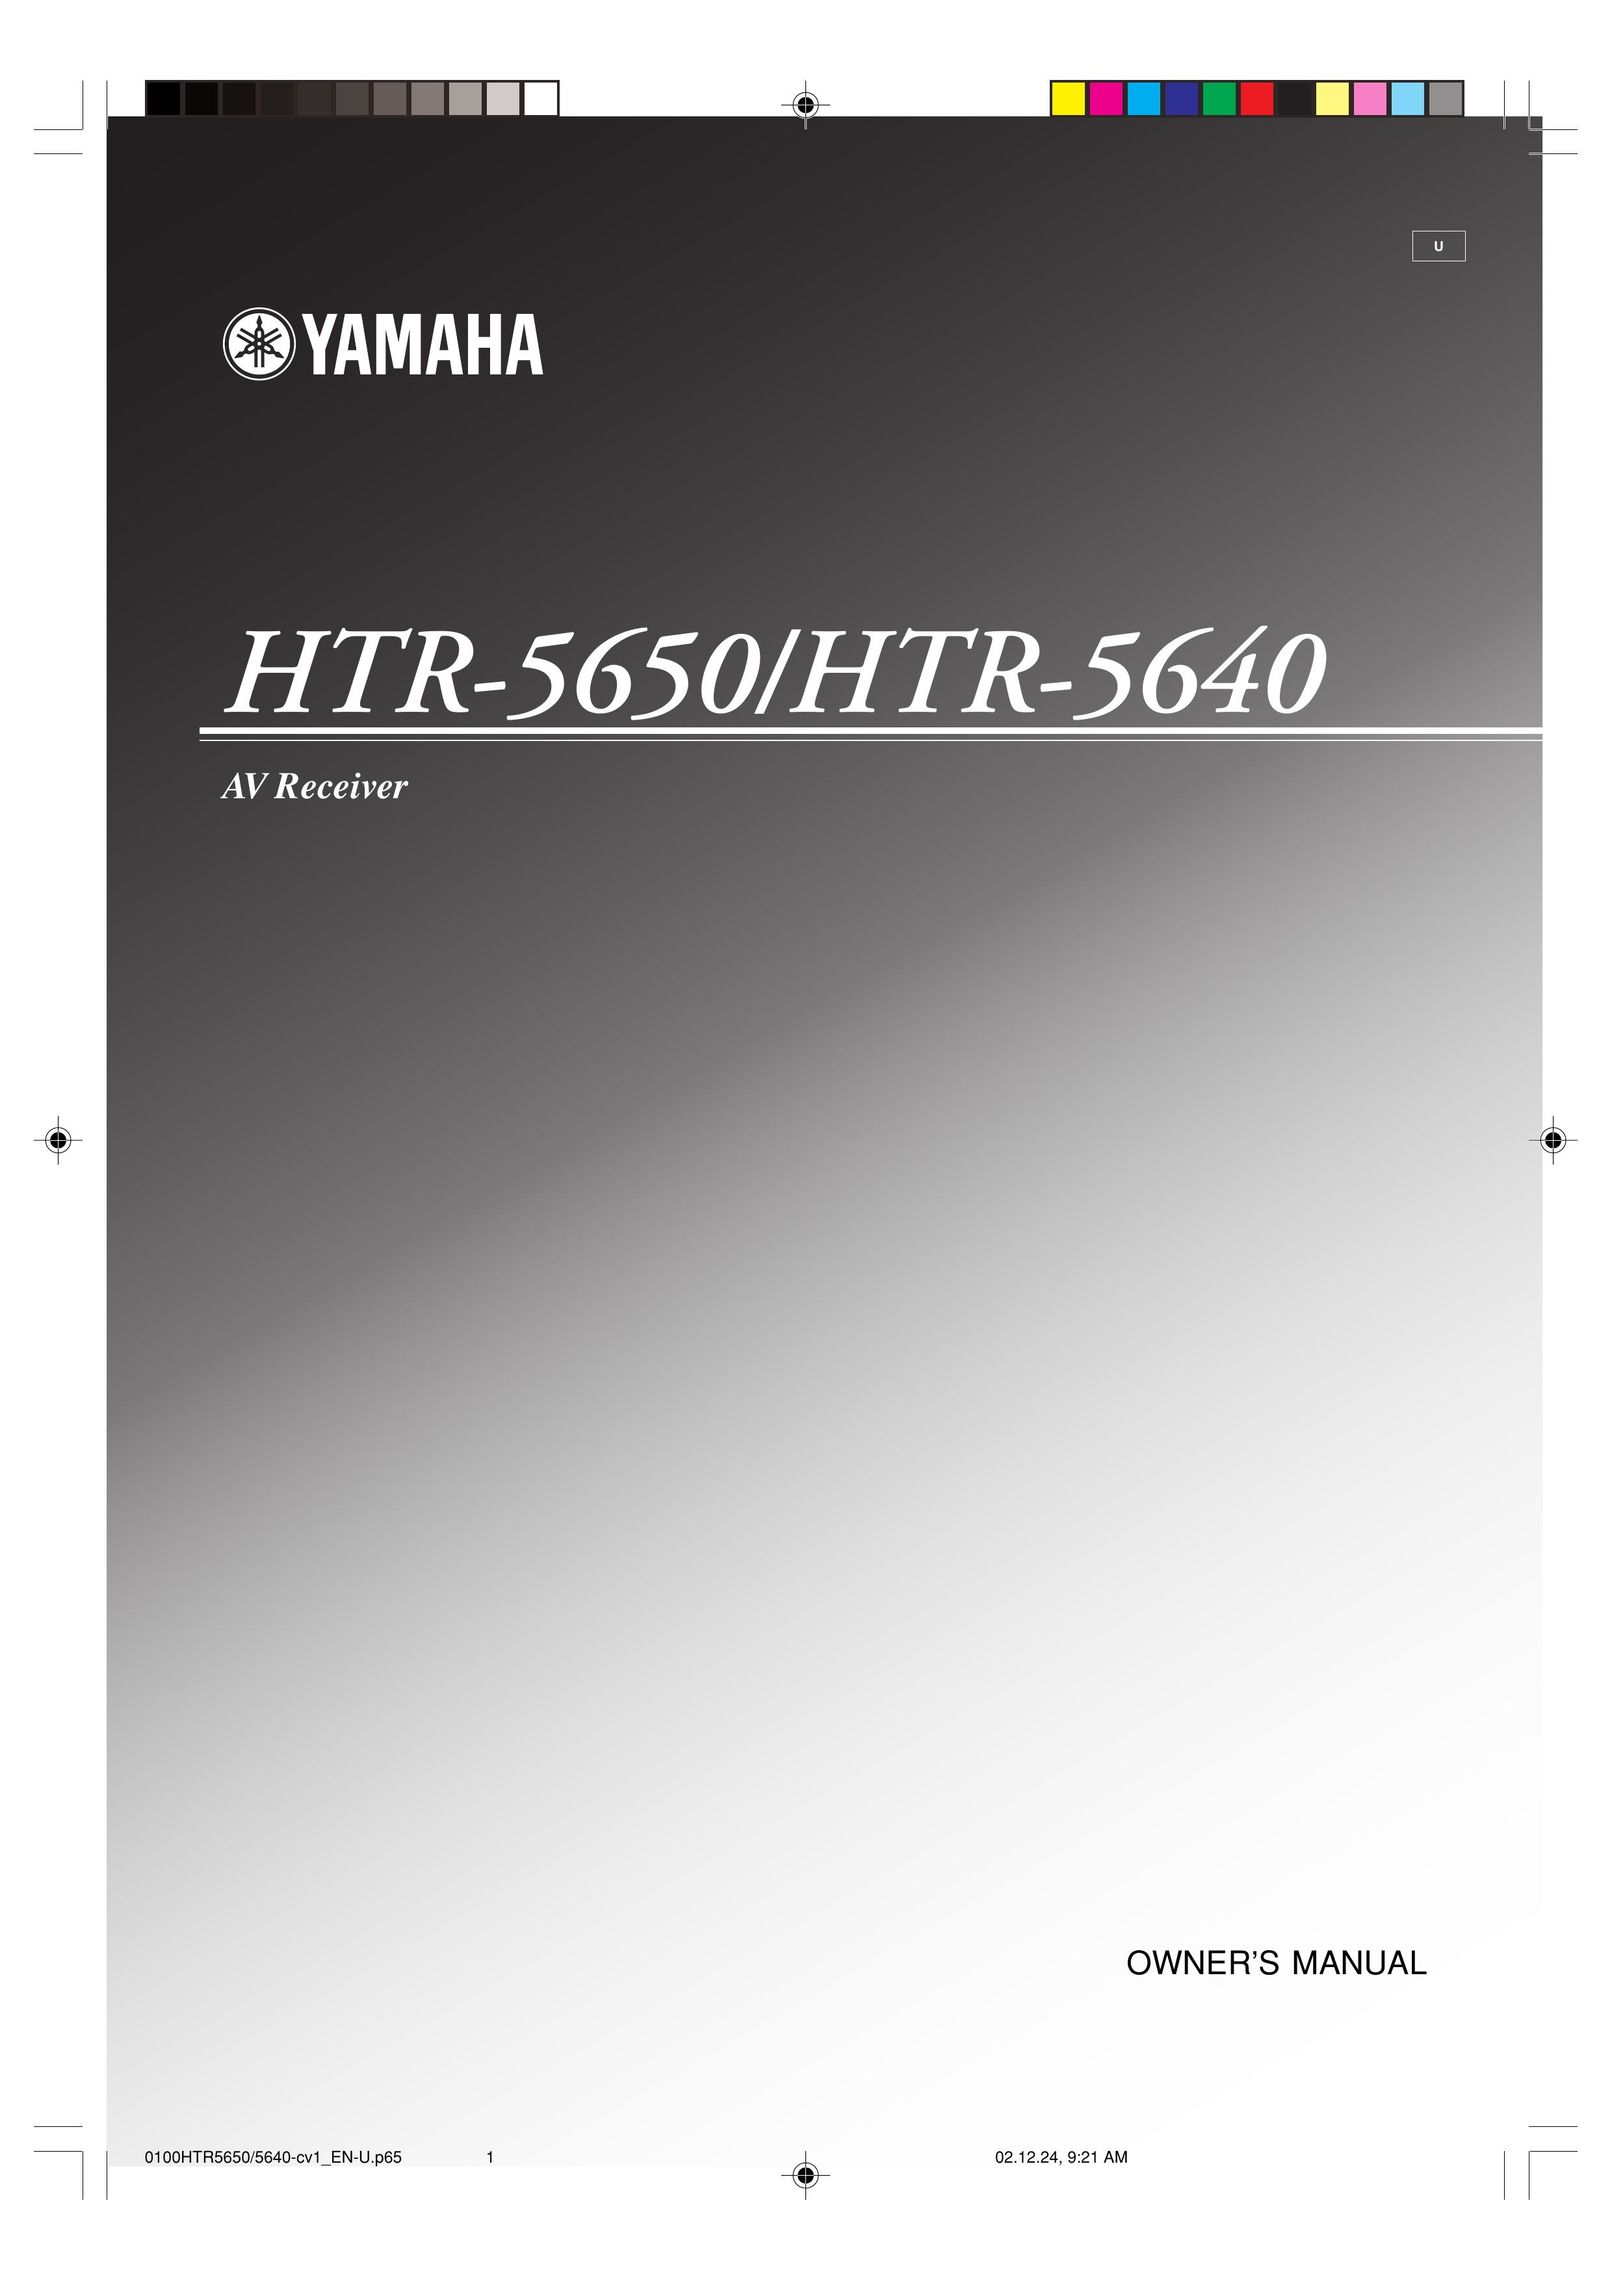 Yamaha 5650 Stereo System User Manual